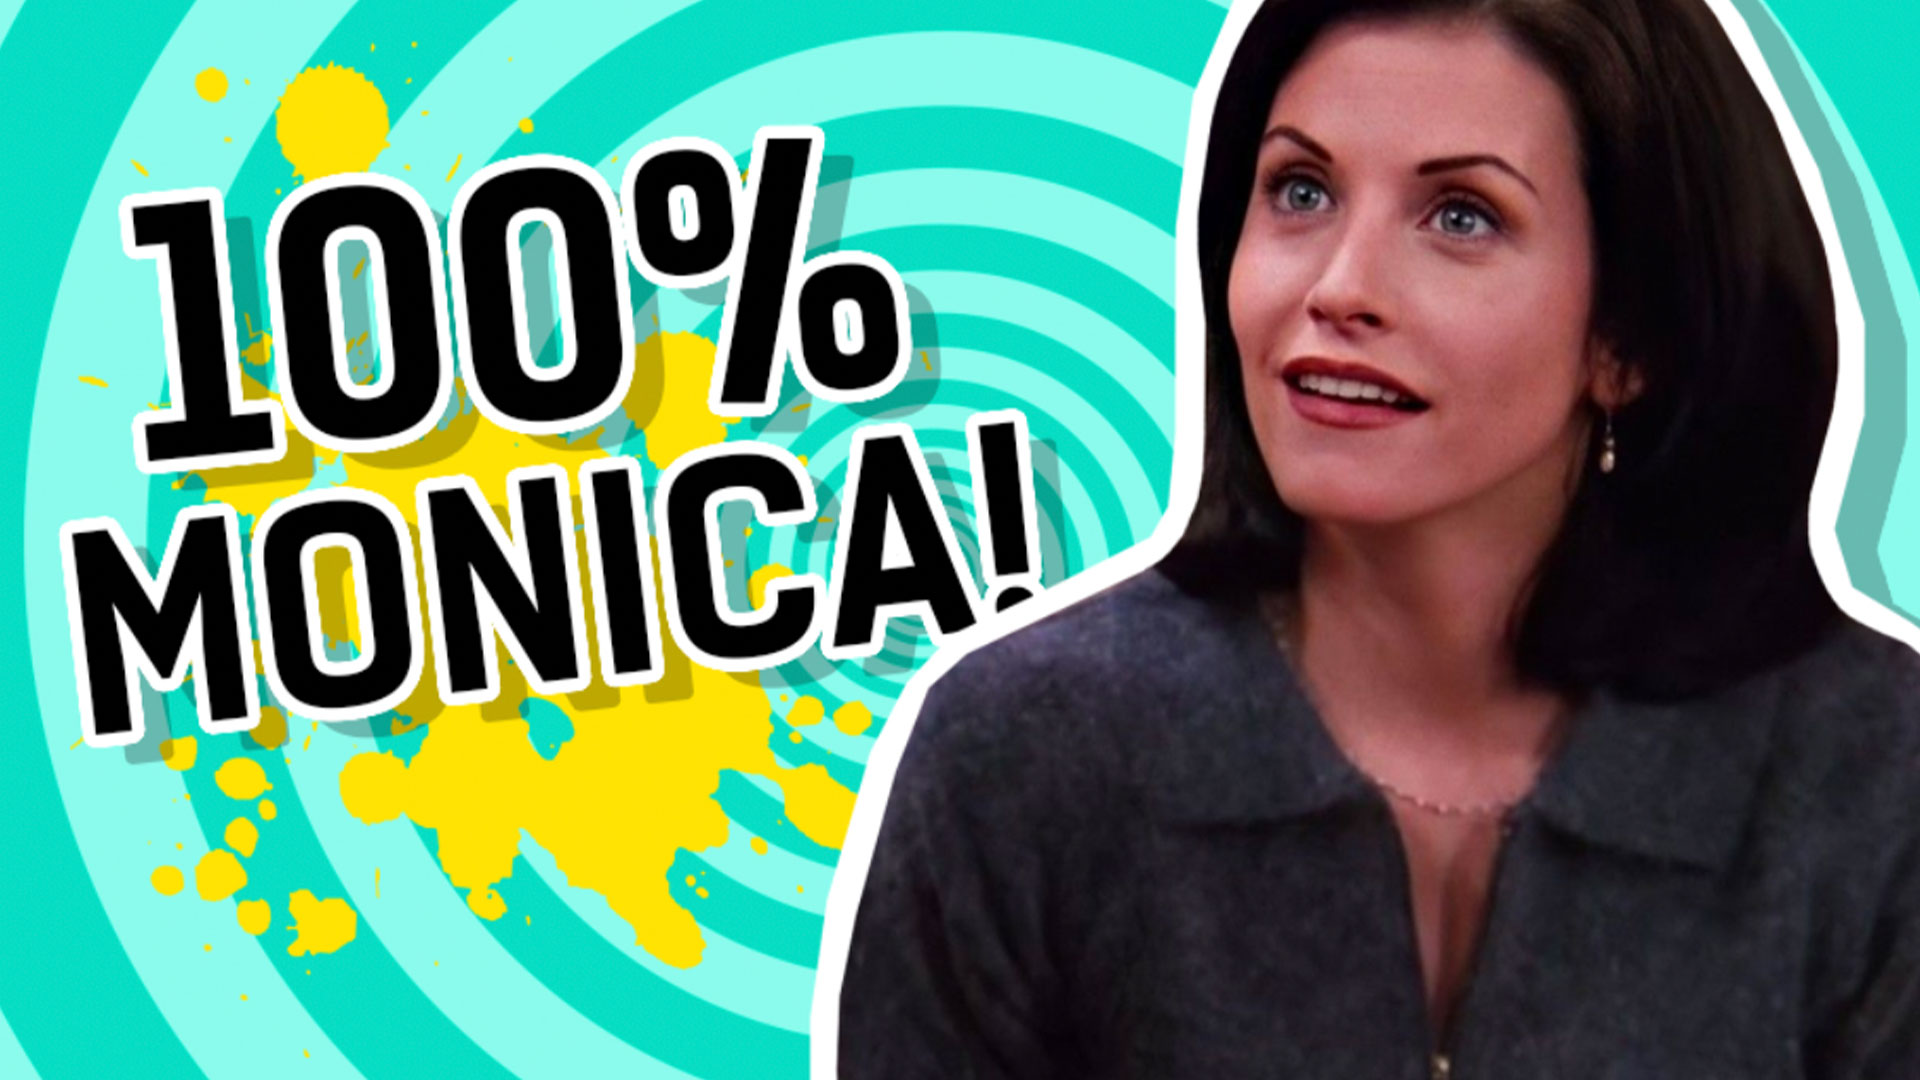 Result: 100% Monica